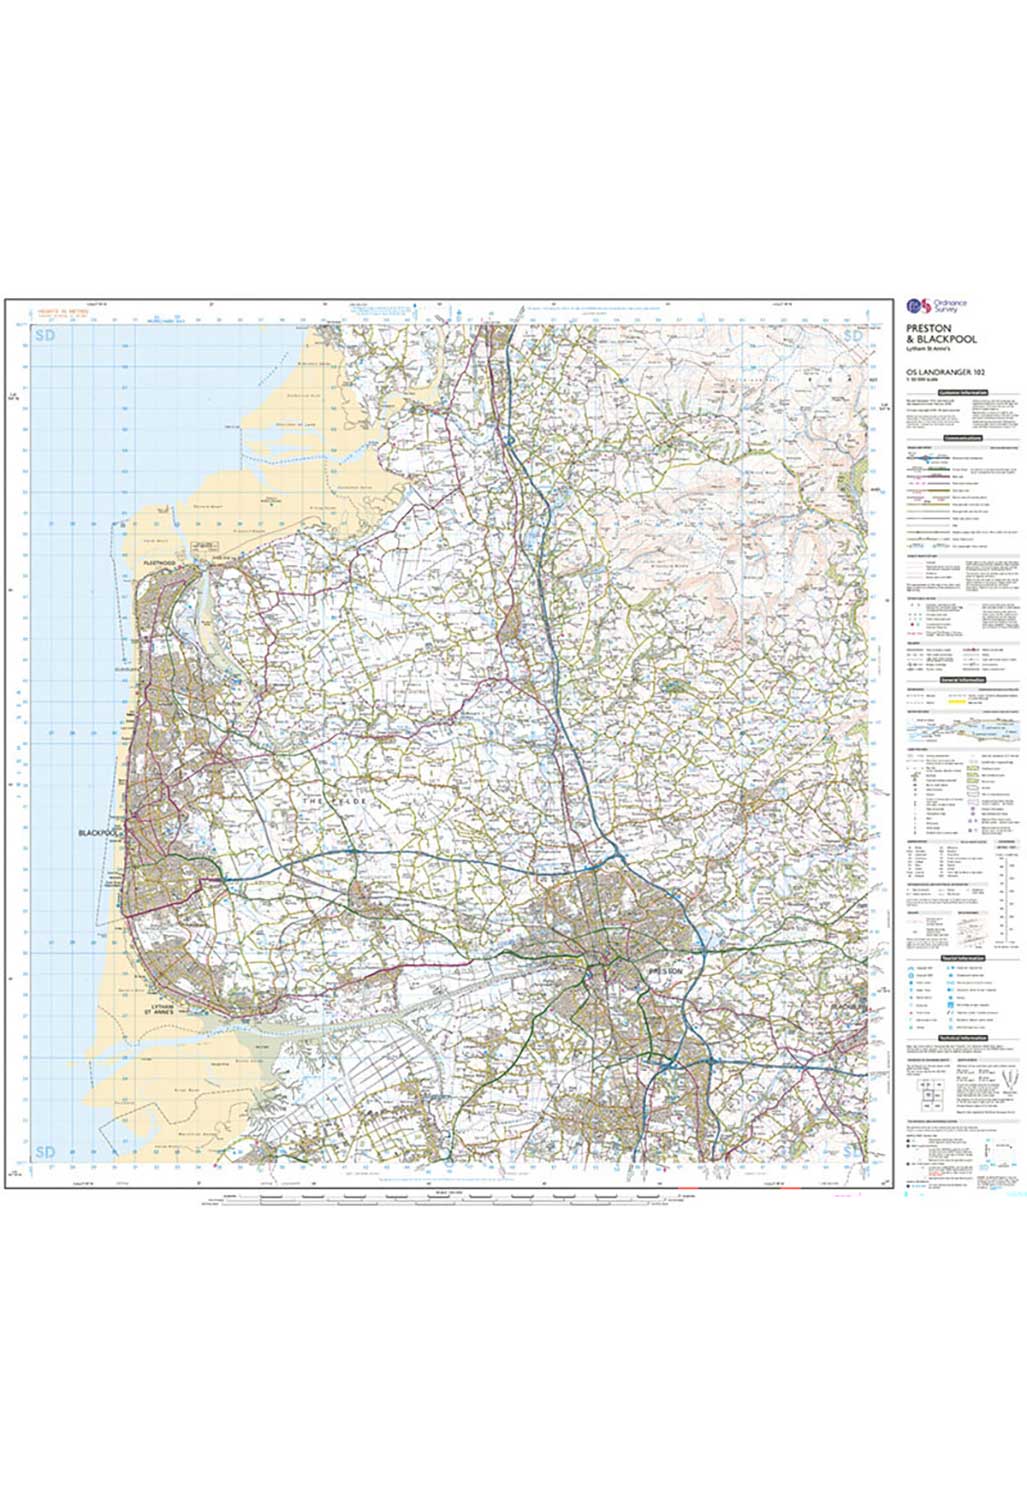 Ordnance Survey Preston, Blackpool & Lytham St Anne's - Landranger 102 Map